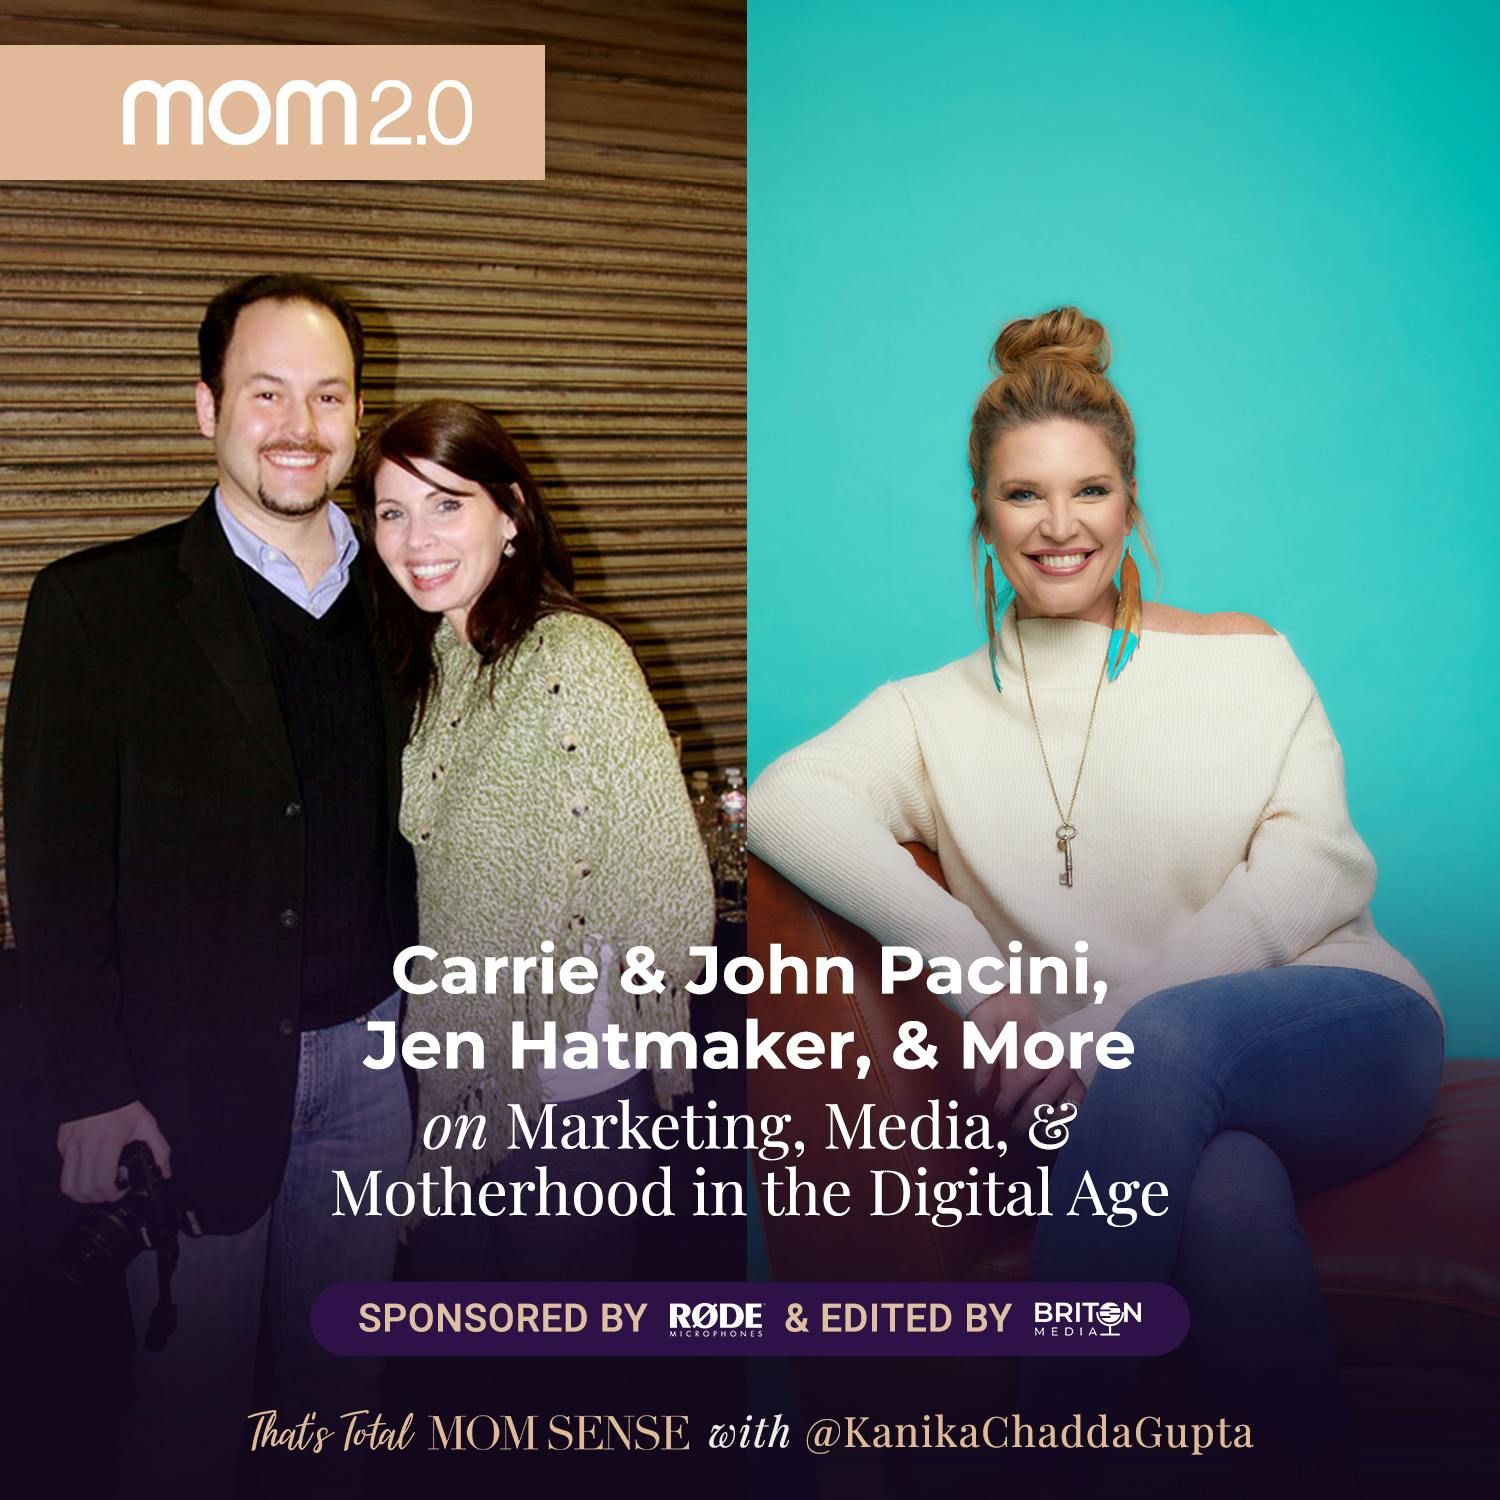 Carrie & John Pacini: Marketing, Media, & Motherhood in the Digital Age